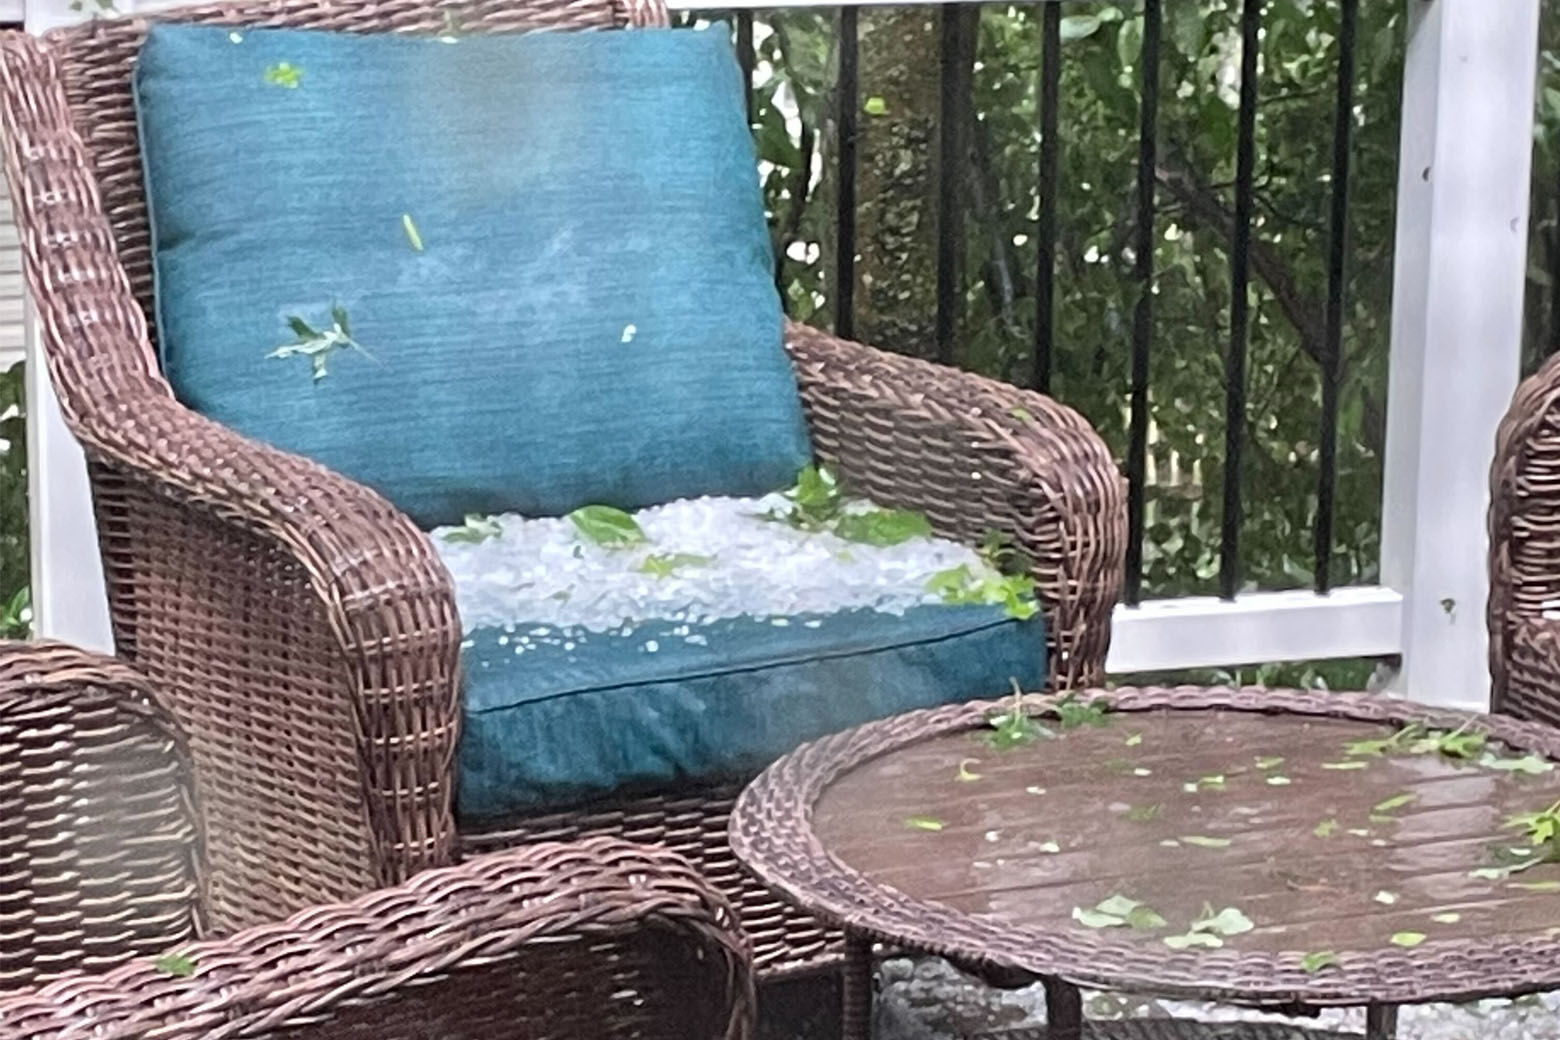 Hail on patio fruniture in Clifton, Virginia